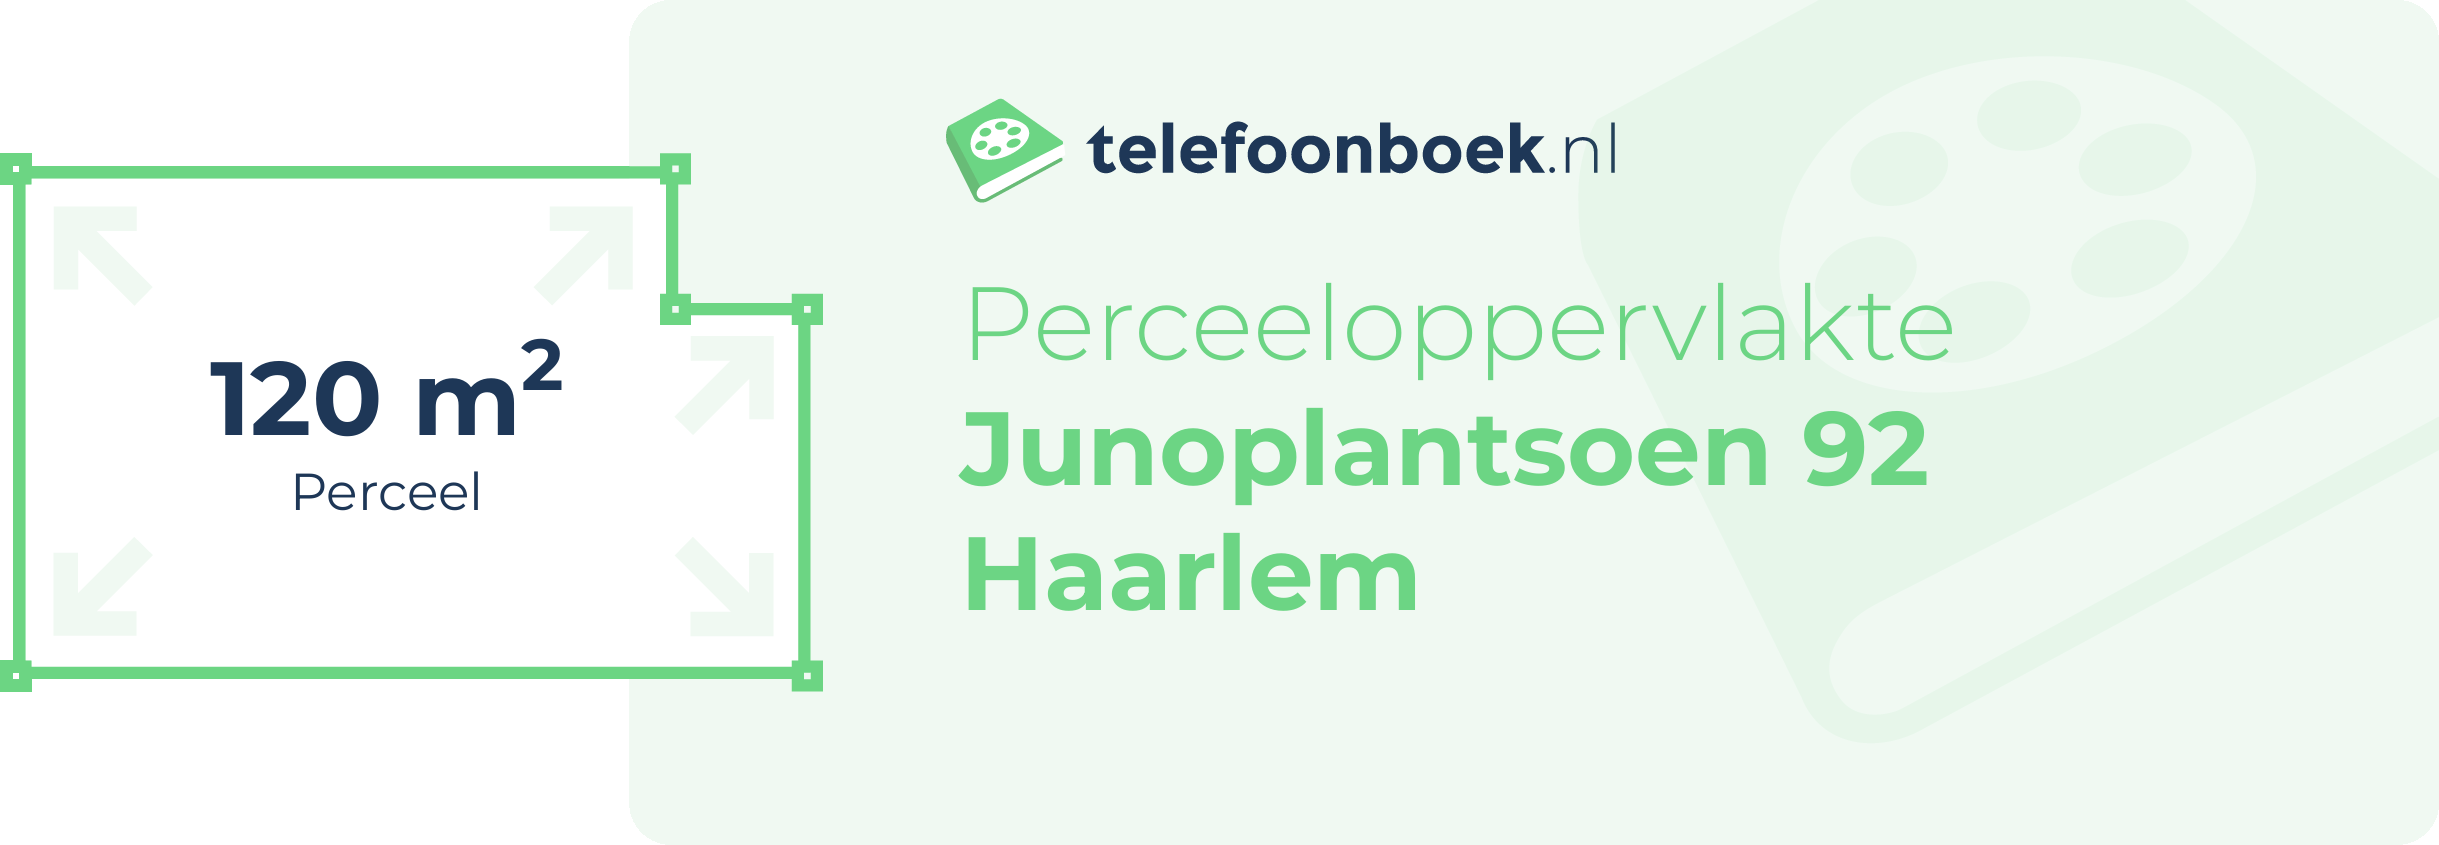 Perceeloppervlakte Junoplantsoen 92 Haarlem